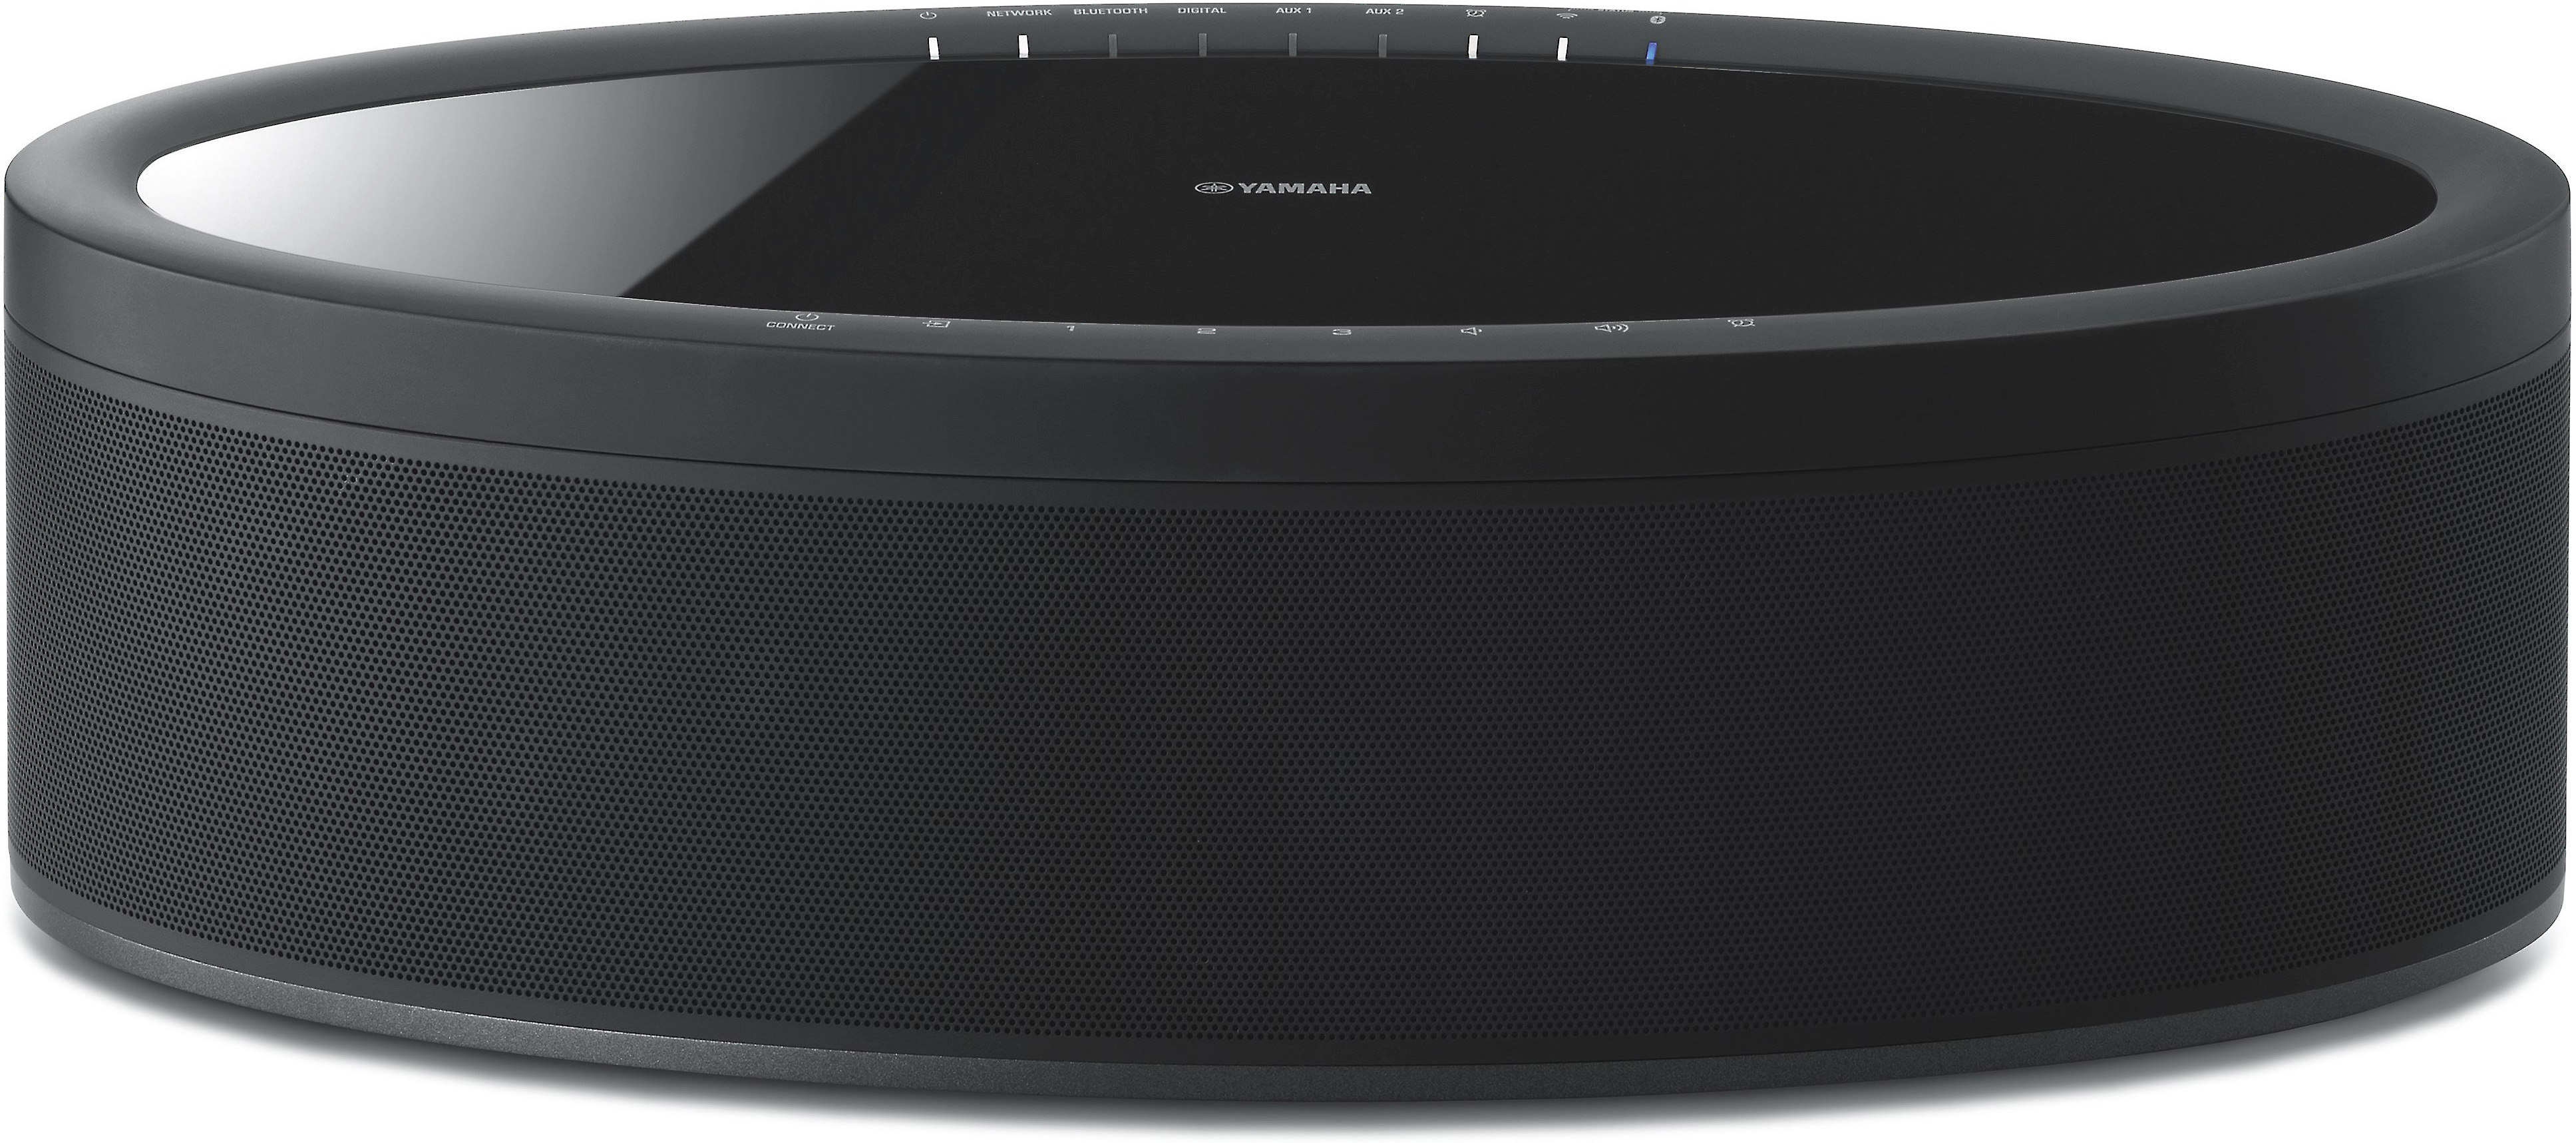 Customer Reviews: Yamaha MusicCast 50 (WX-051) (Black) Wireless